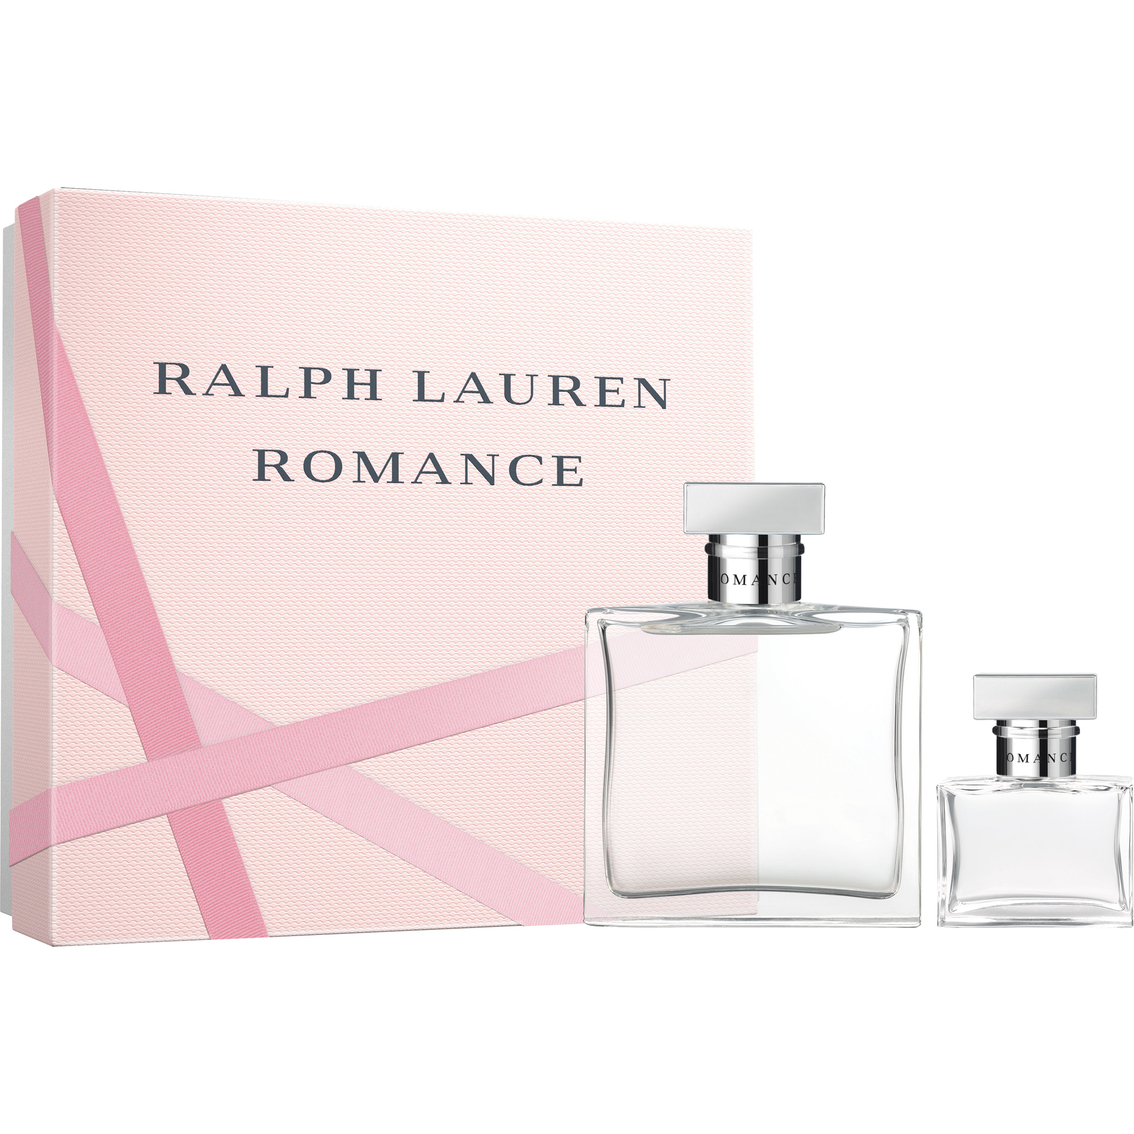 Ralph lauren Romance Eau De Parfum Spray